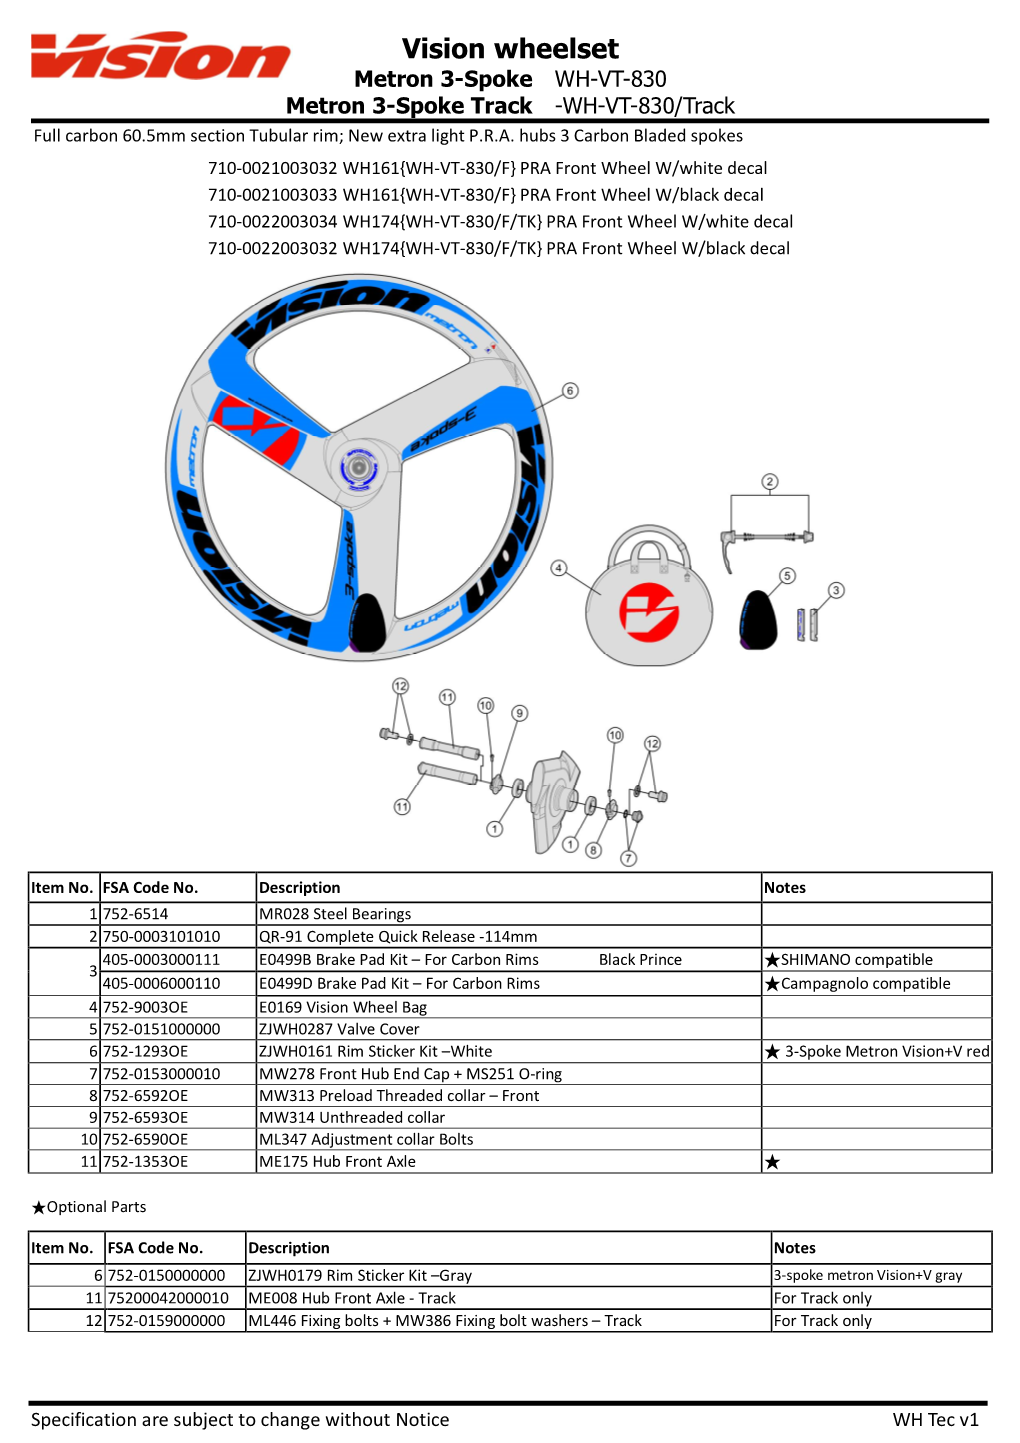 Wheelset Servicable Parts for Metron 3-Spoke 20161124